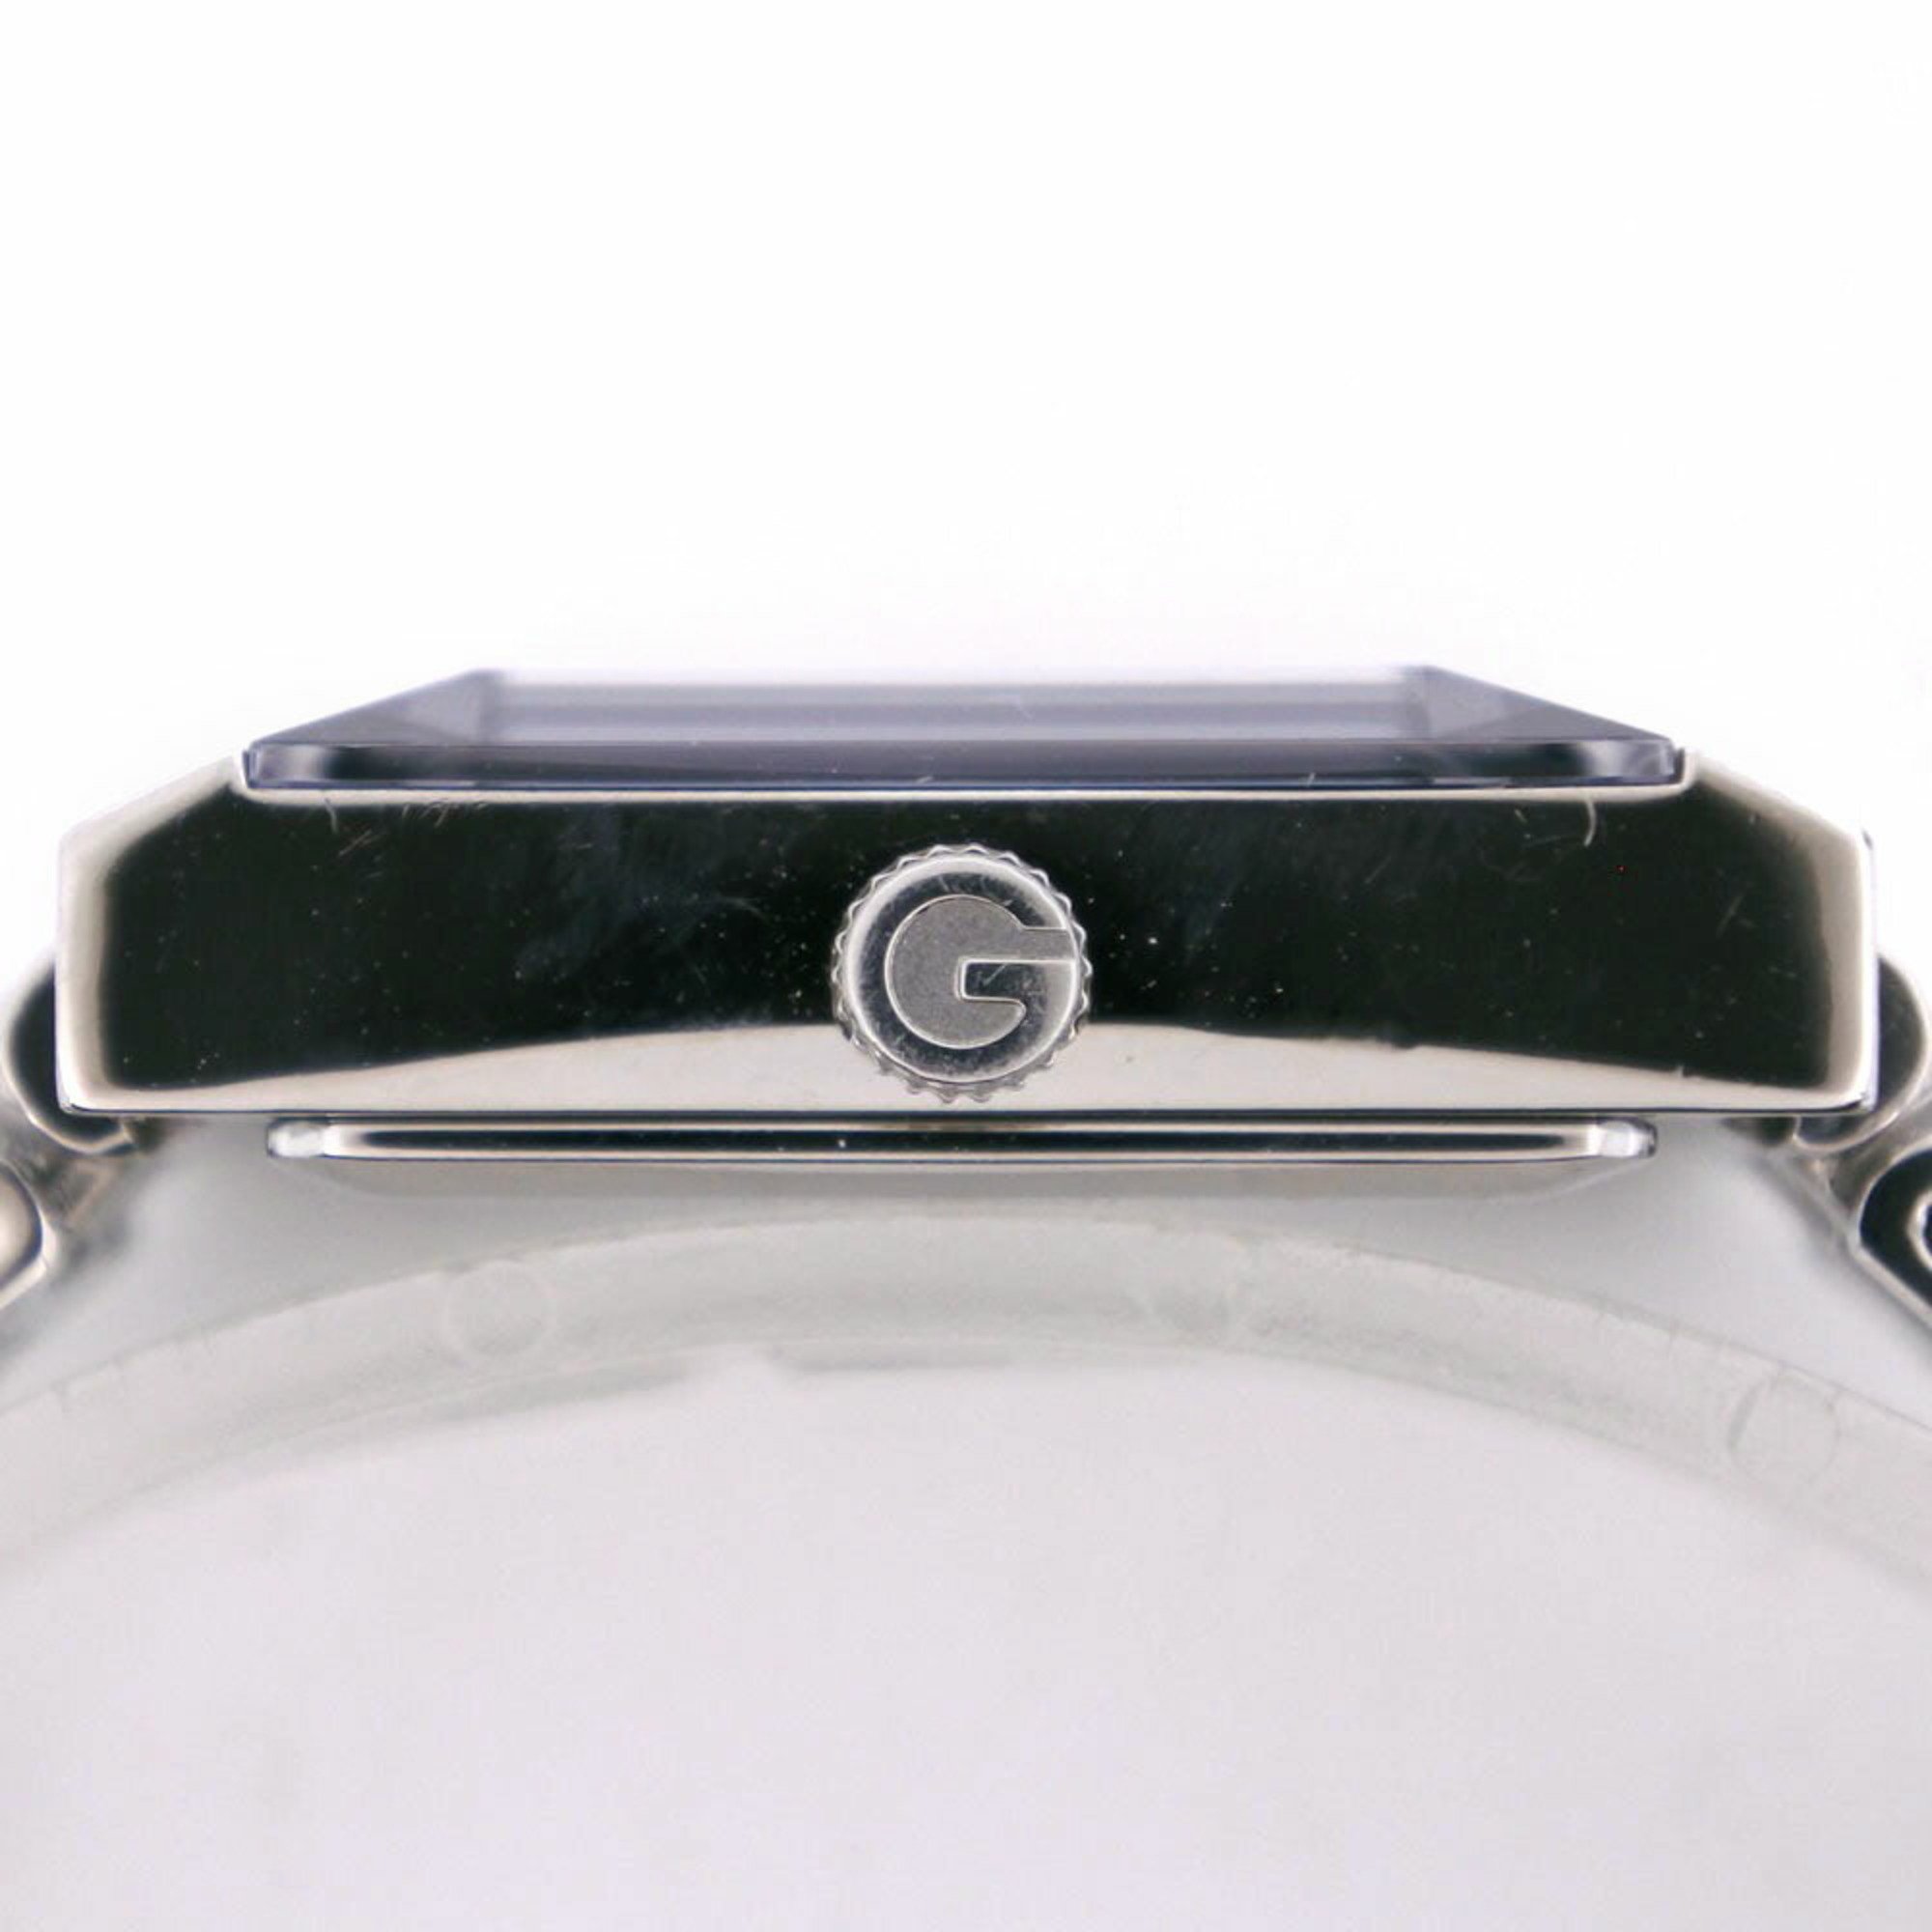 Gucci G Frame Watch 3P Diamond 128.4 Stainless Steel Silver Quartz Analog Display Dial Women's I213023035